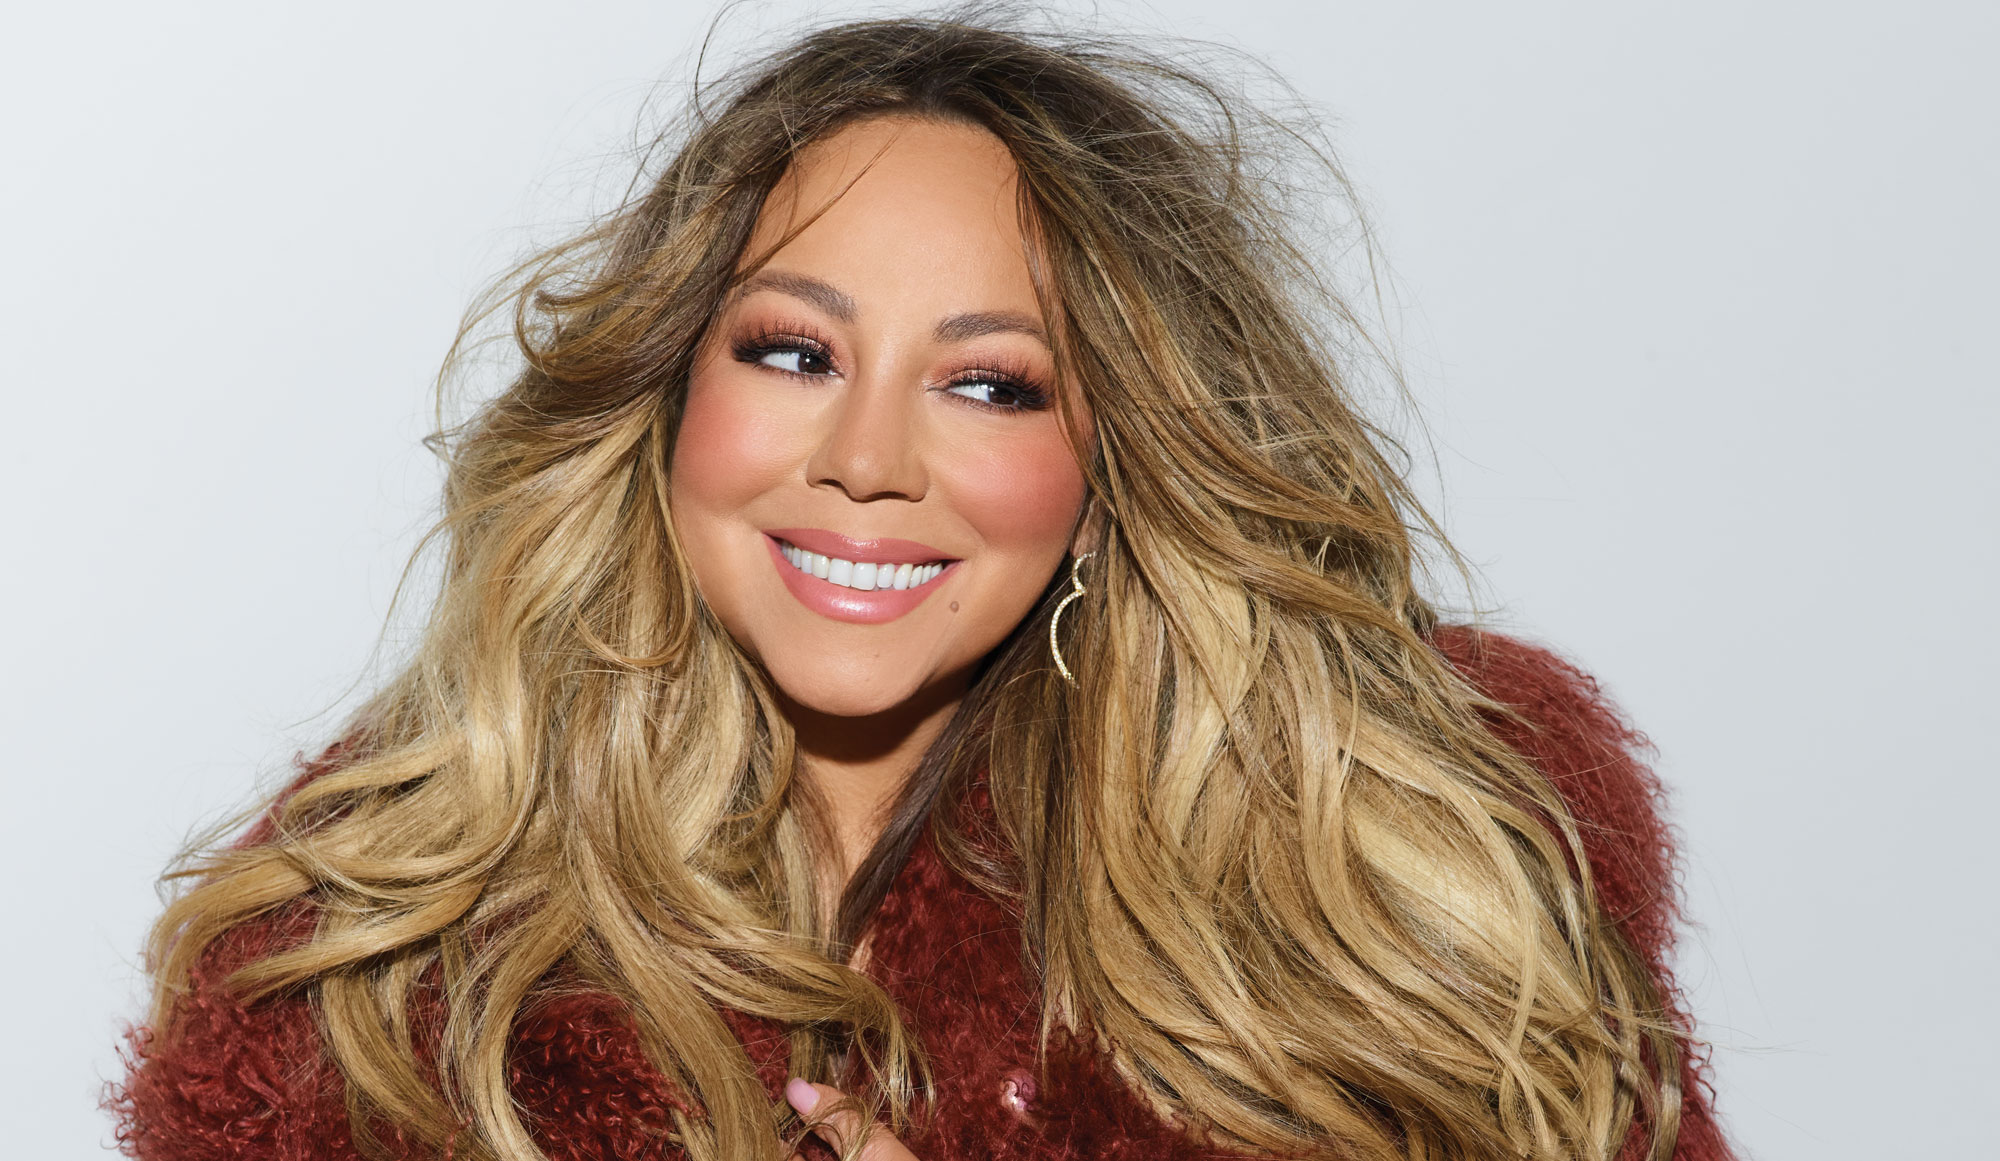 Mariah Carey Biography and Net Worth